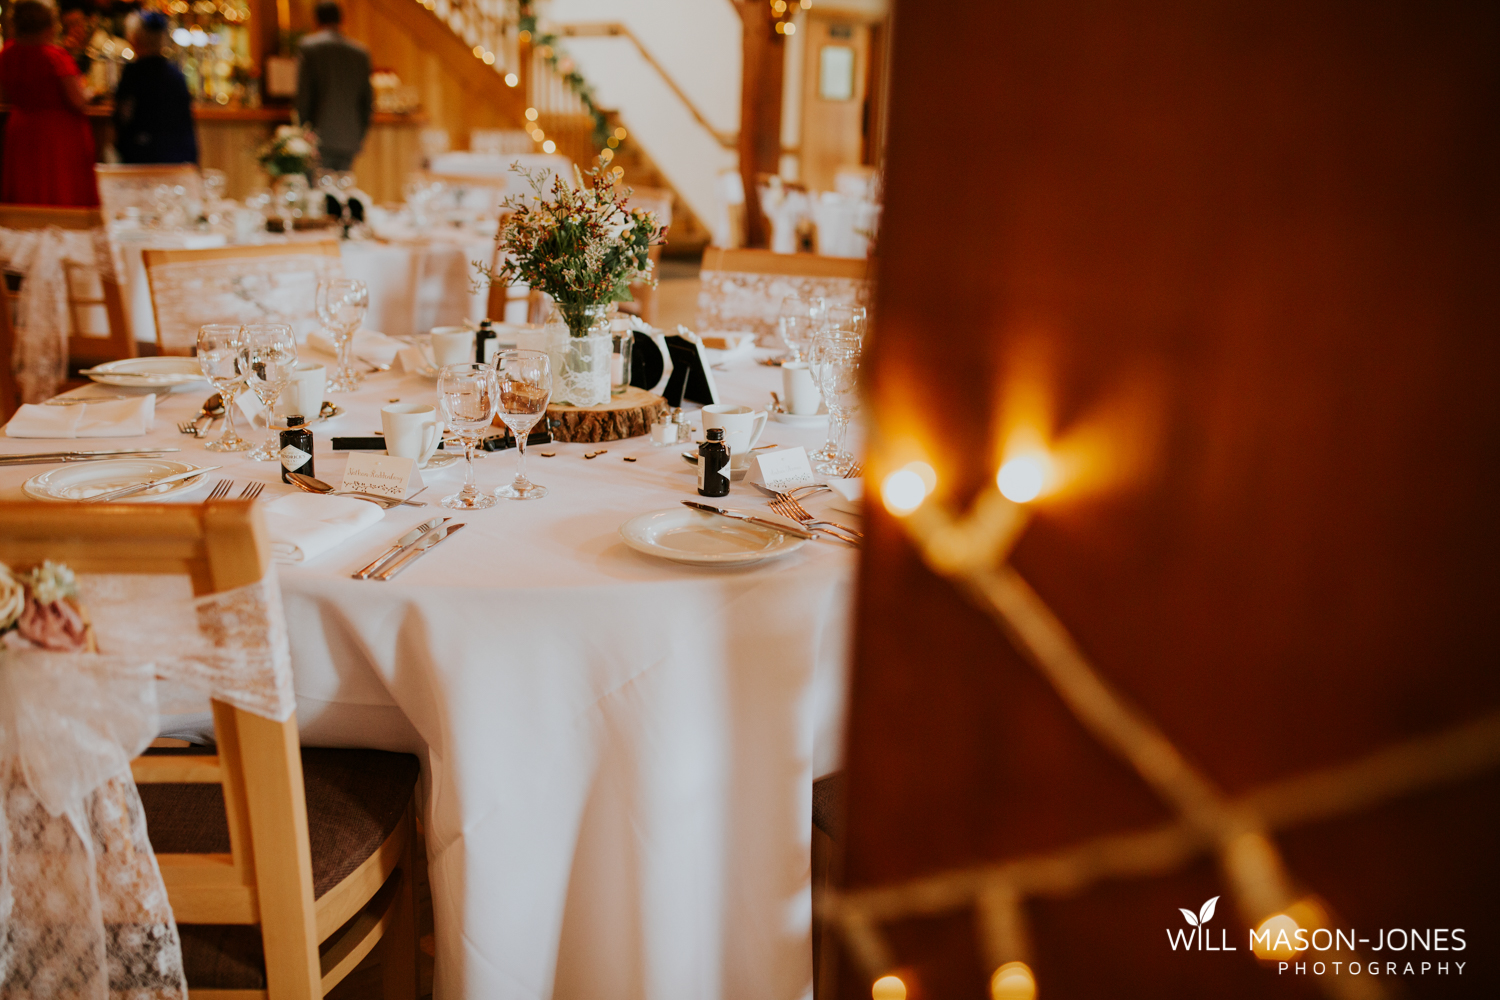  the king arthur hotel swansea wedding reception room details 